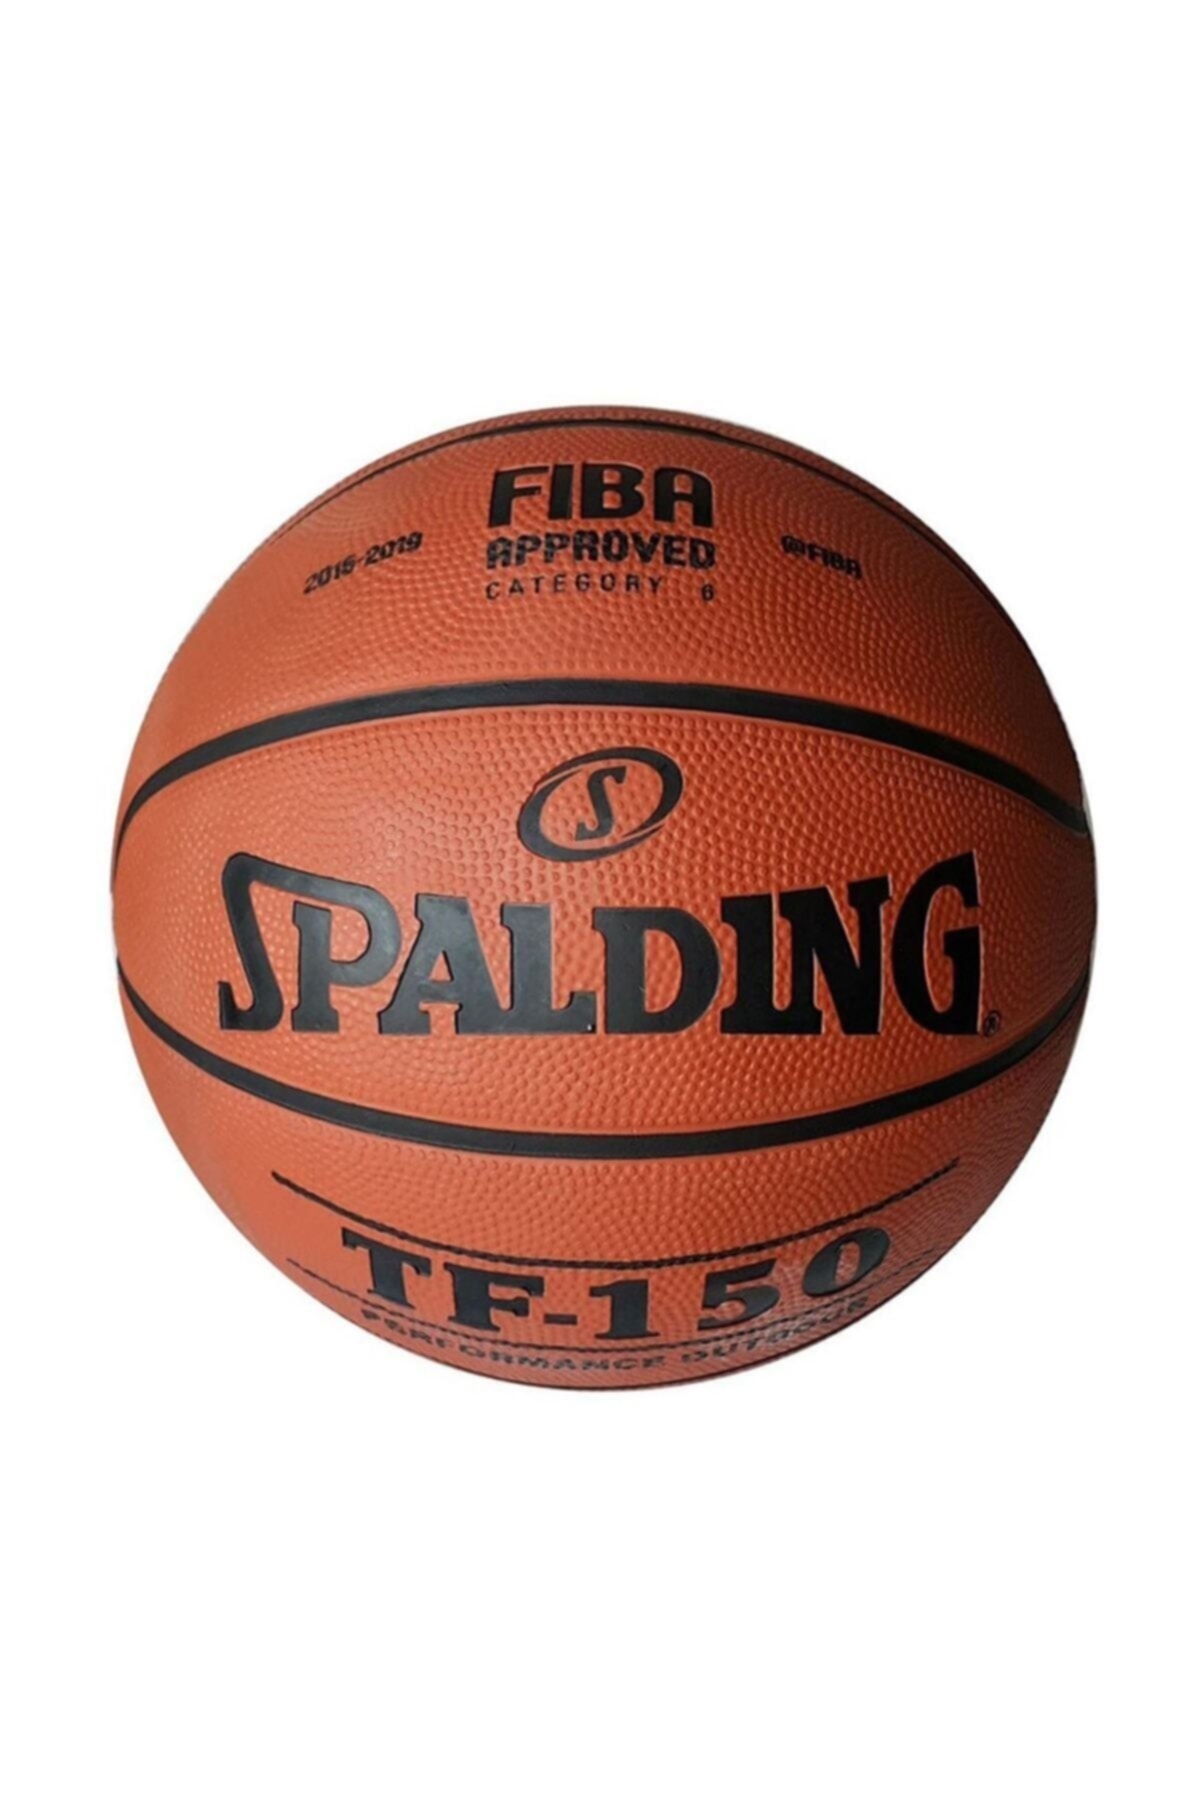  Tf-150 Basketbol Topu Perform Size 7 Fıba Logolu 83-572 - 8774 